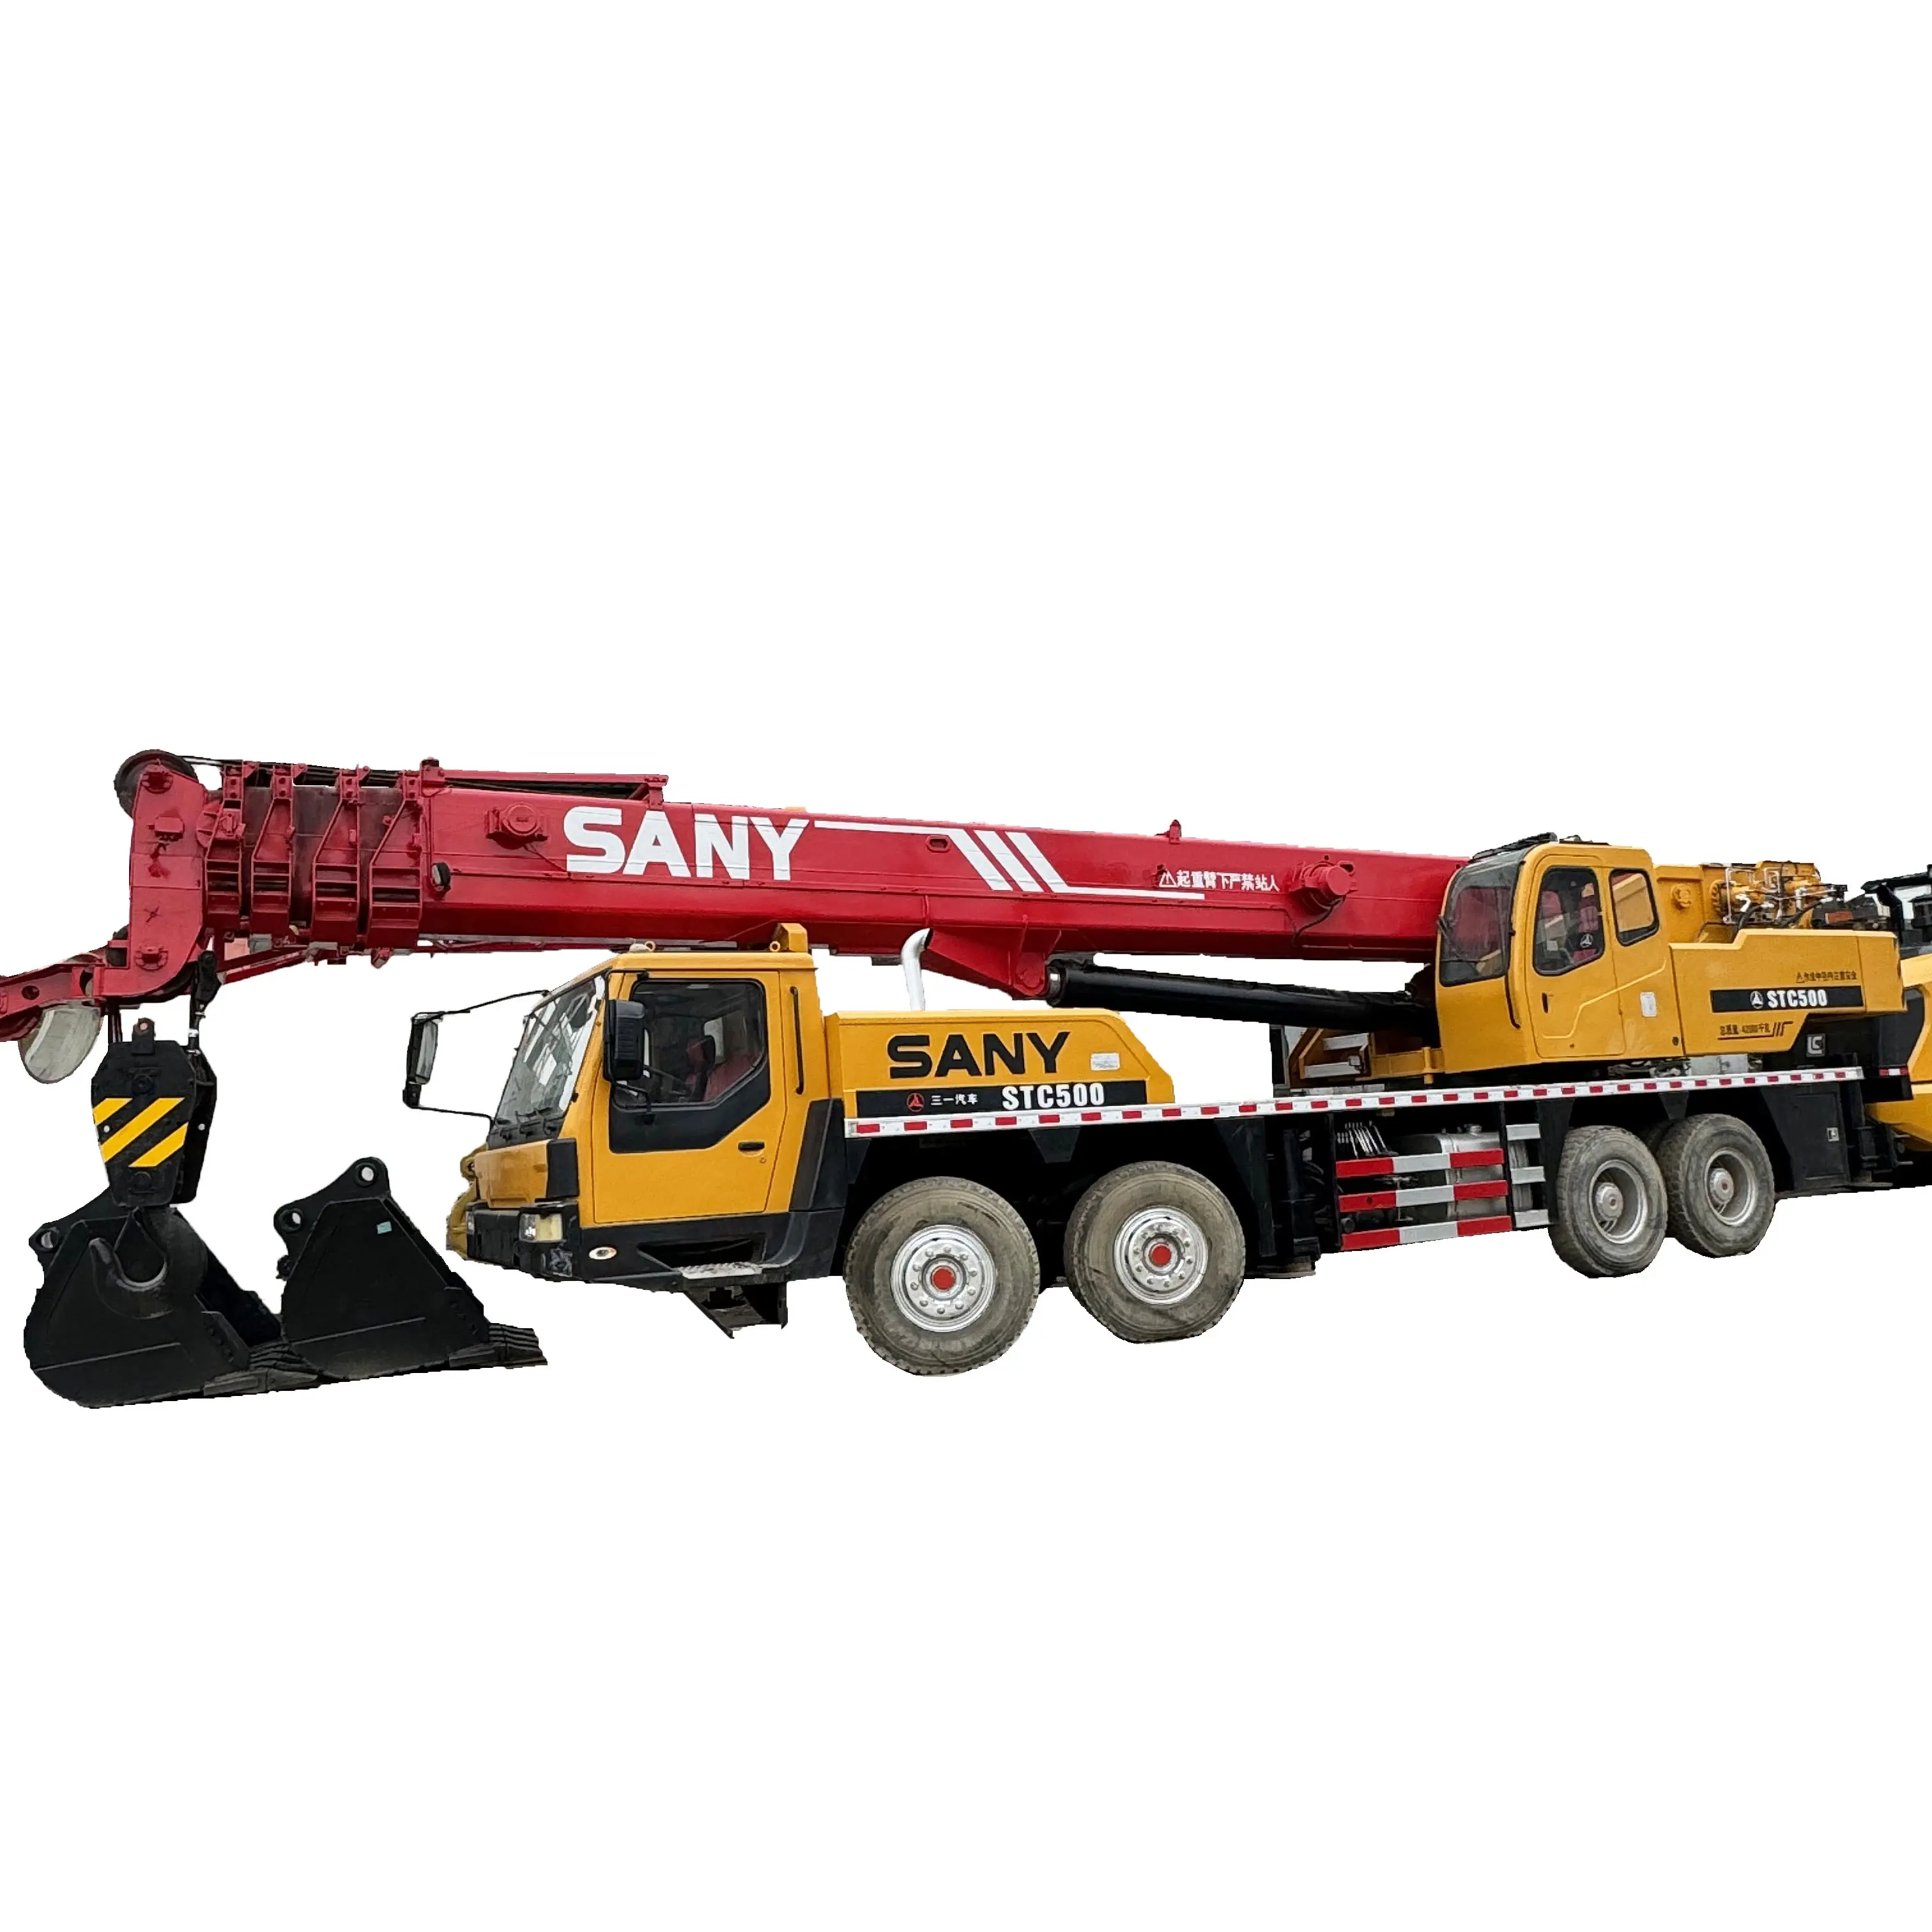 50 टन प्रयुक्त ट्रक क्रेन Sany STC500 सेकेंड हैंड हाइड्रोलिक मोबाइल क्रेन सस्ती कीमत प्रयुक्त ट्रक क्रेन